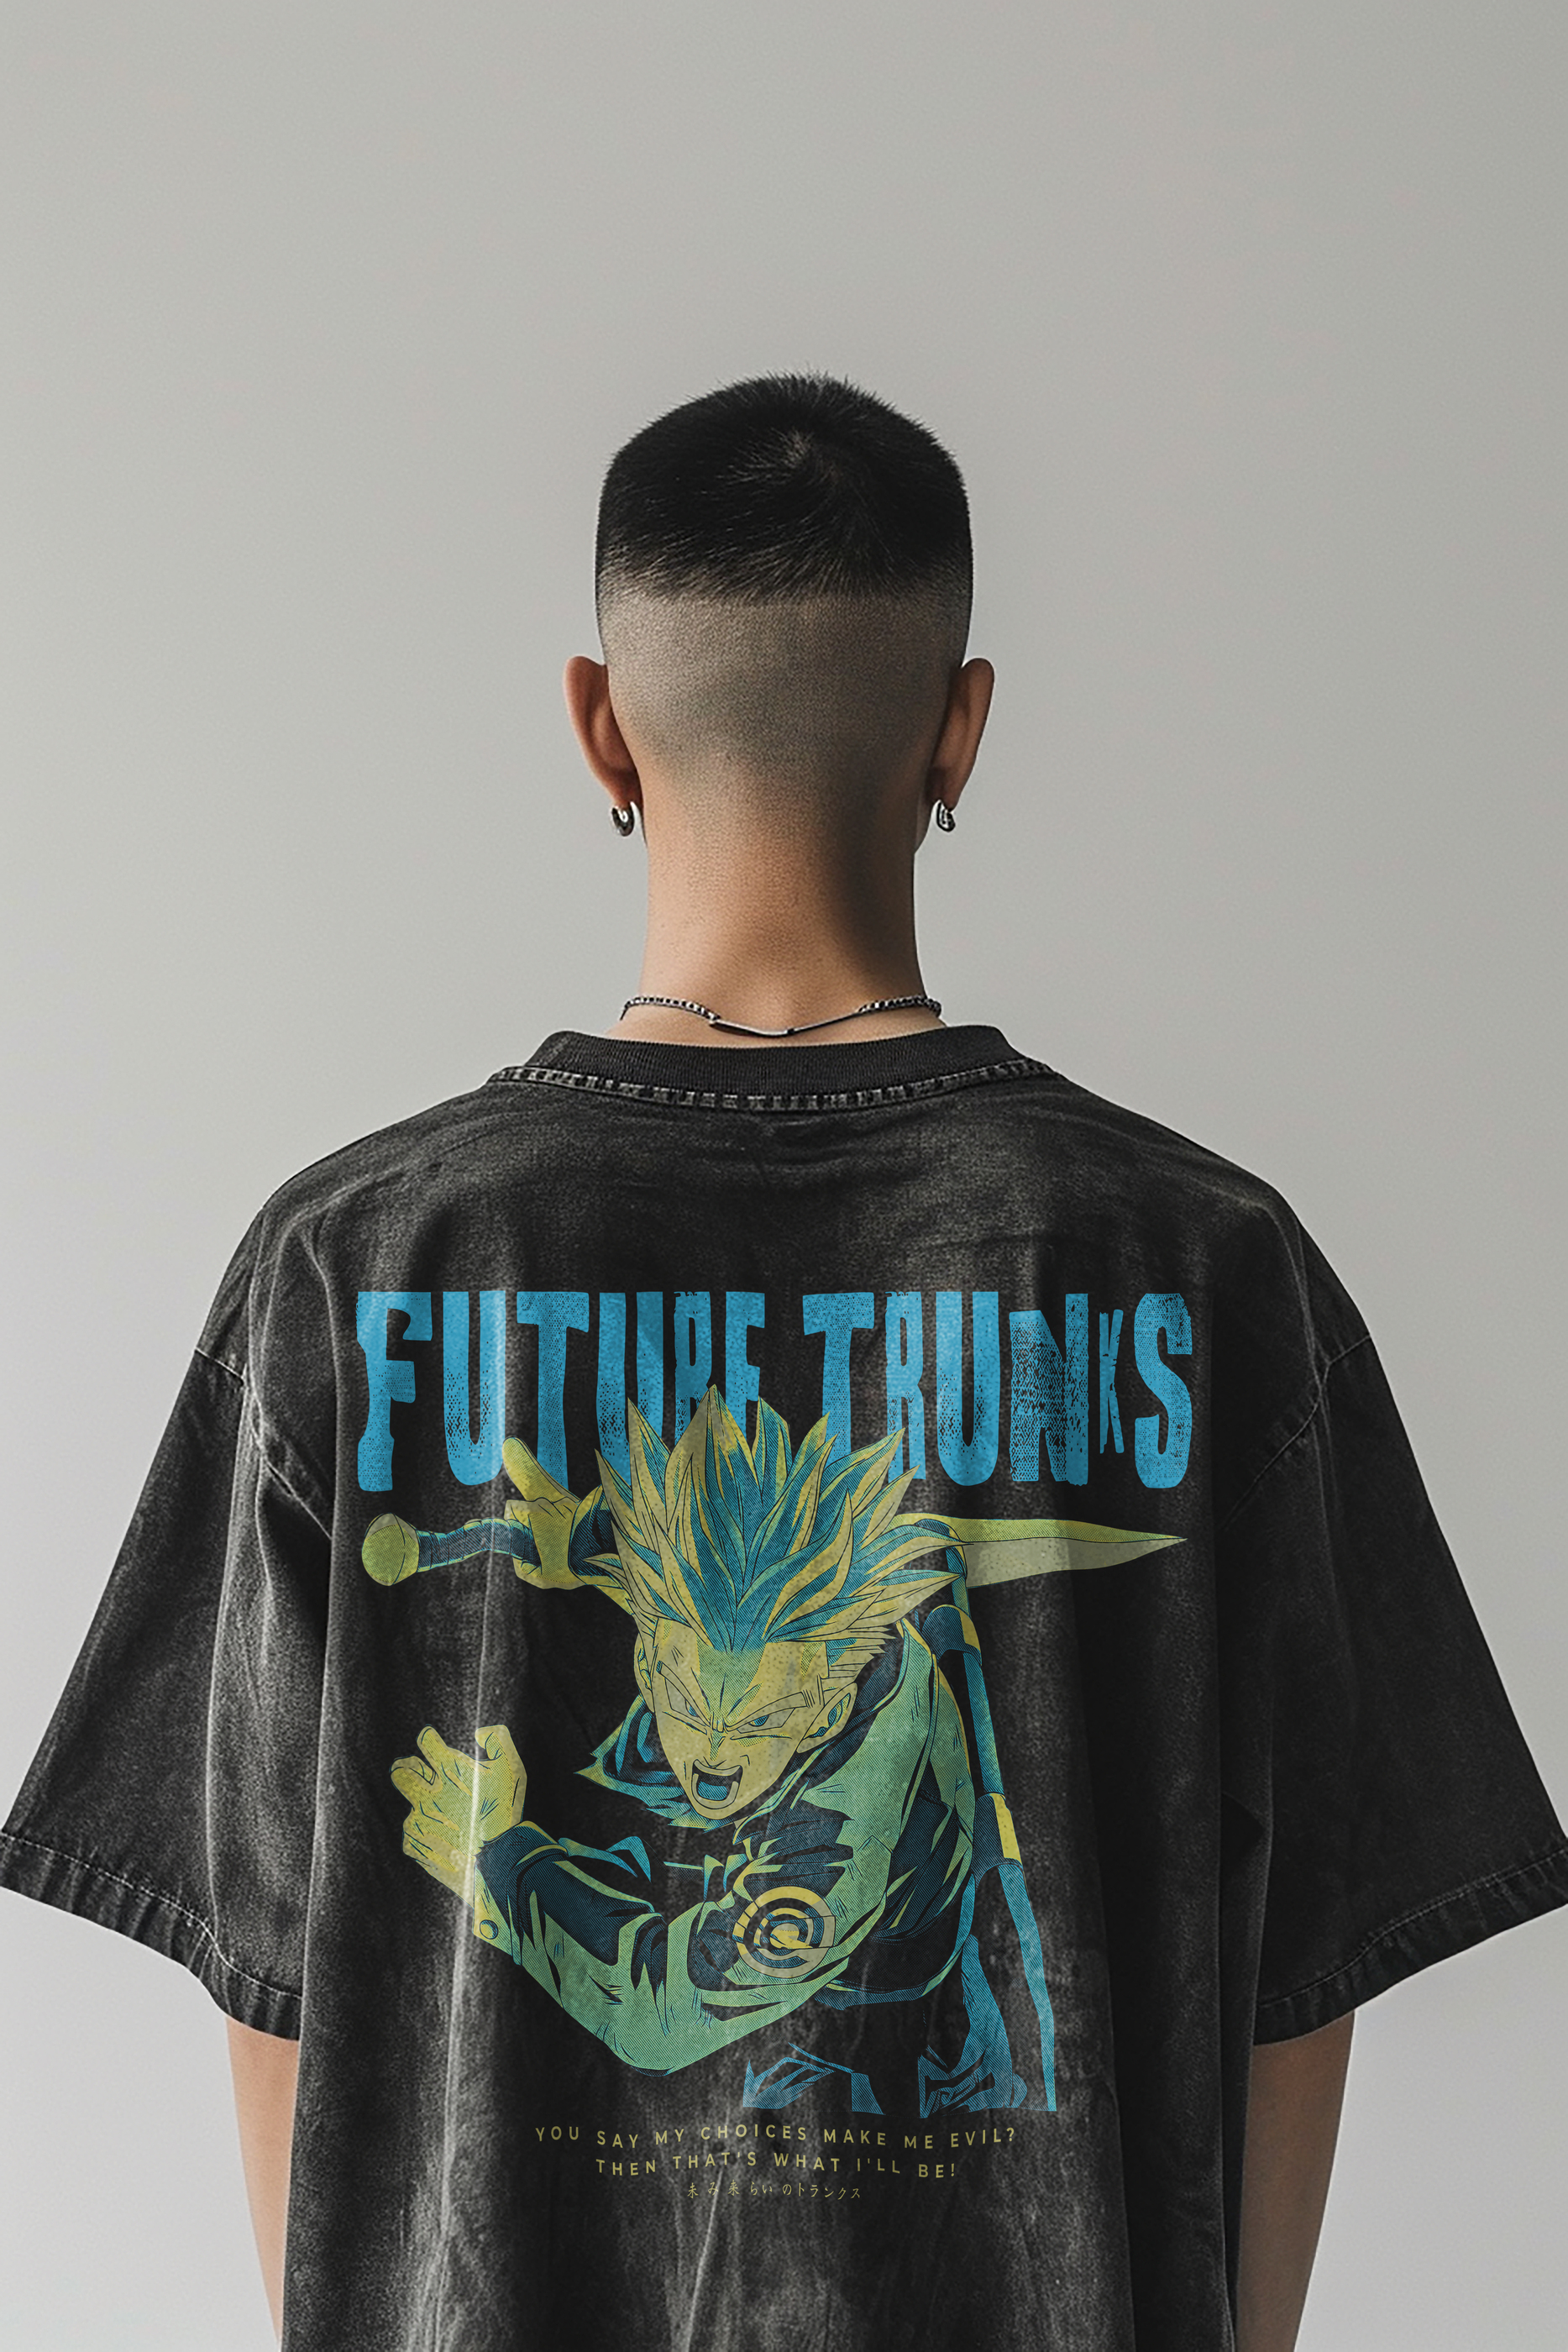 Future Trunks Vintage T-Shirt | Dragon Ball Super